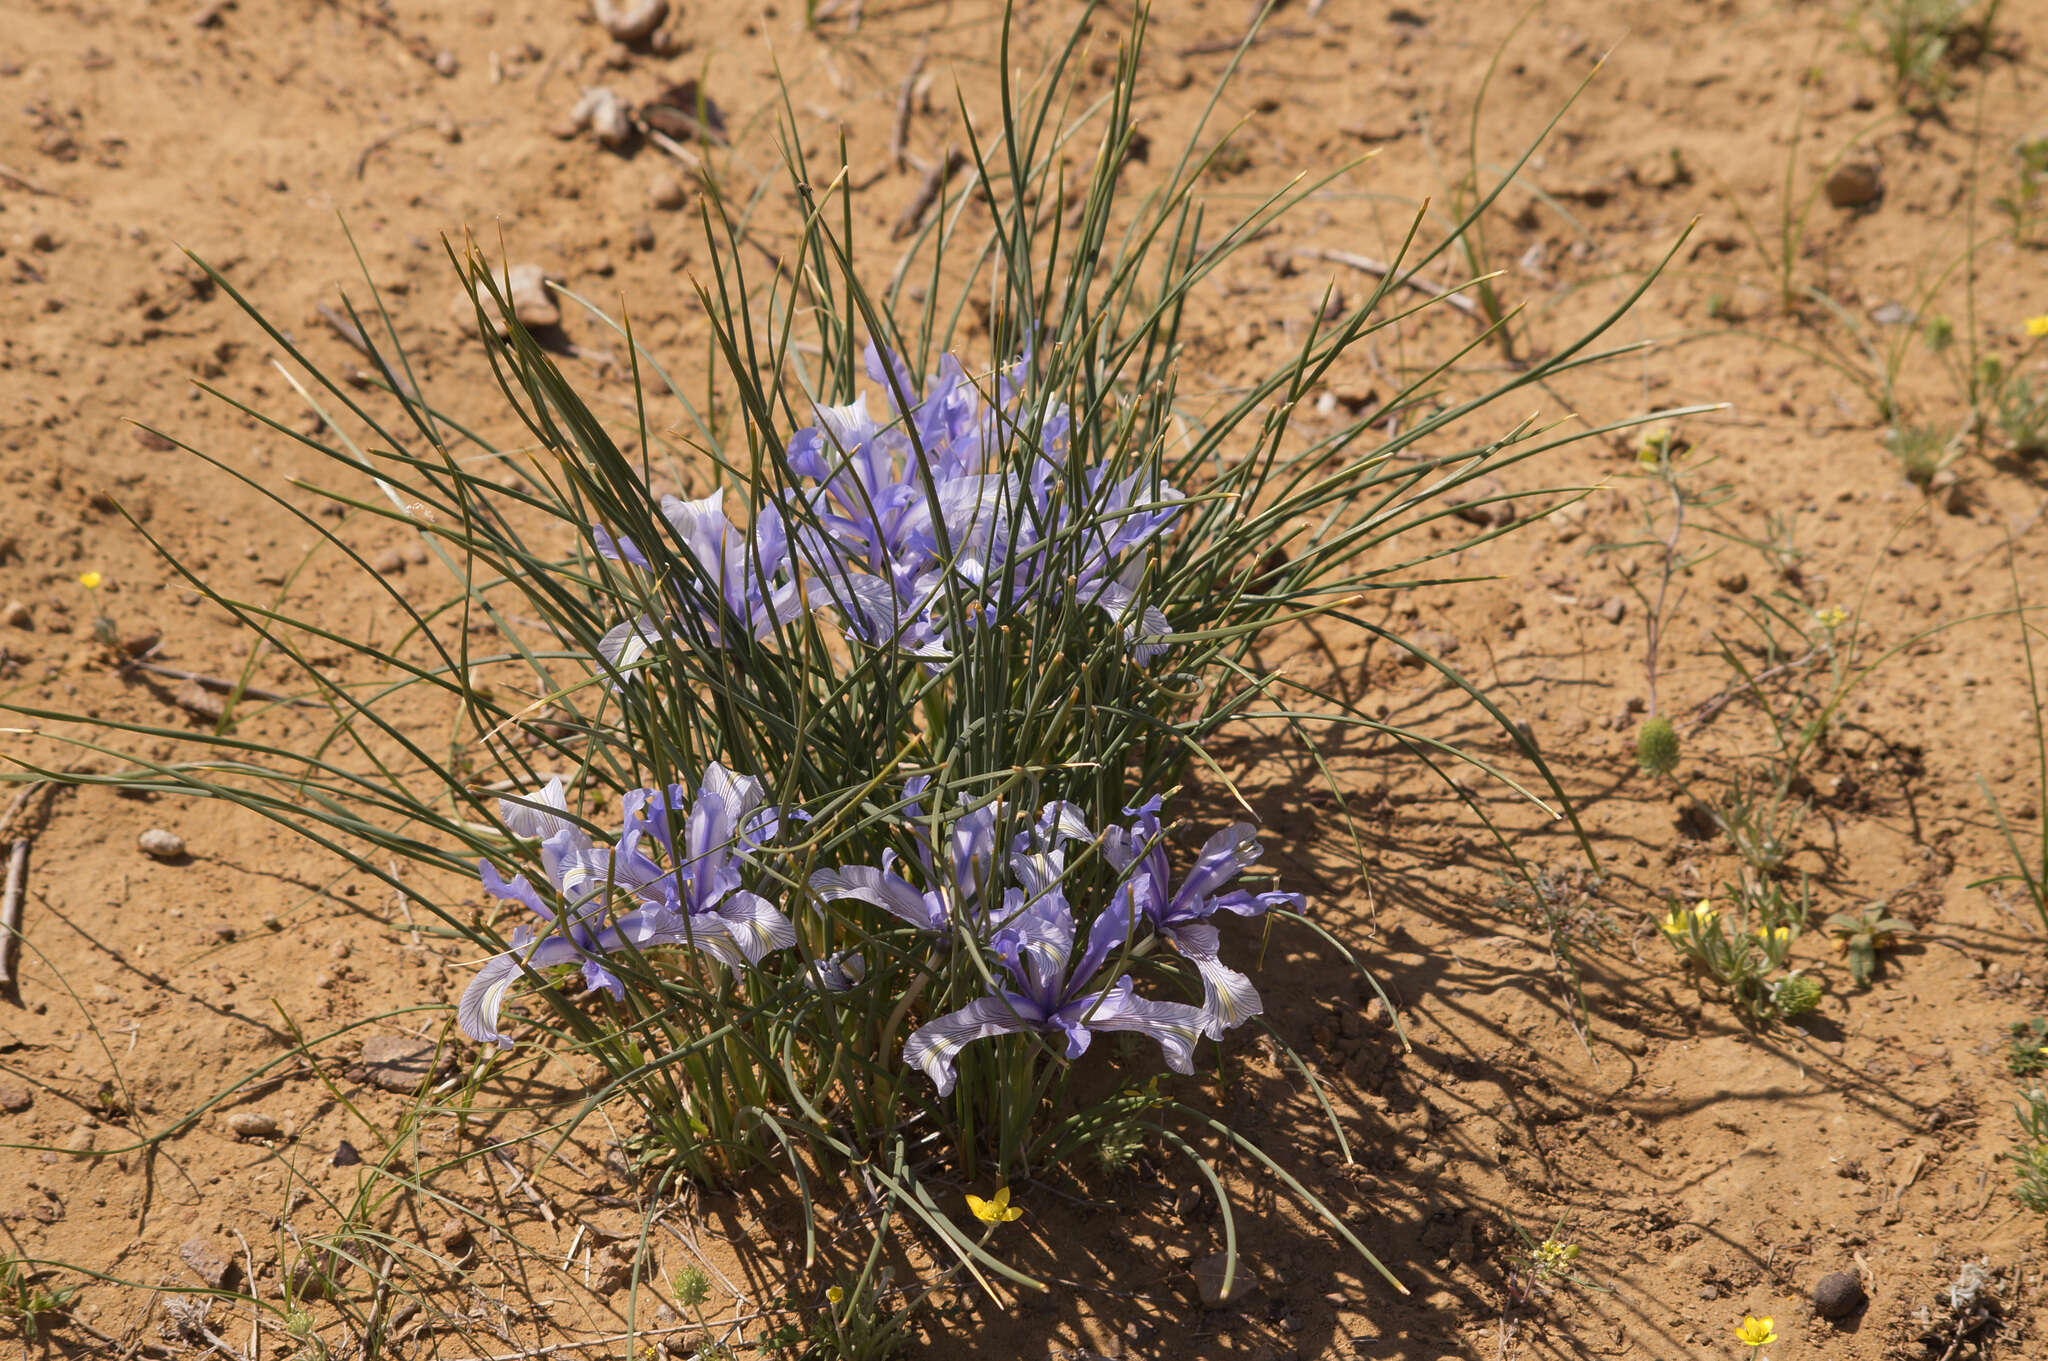 Image of Iris tenuifolia Pall.